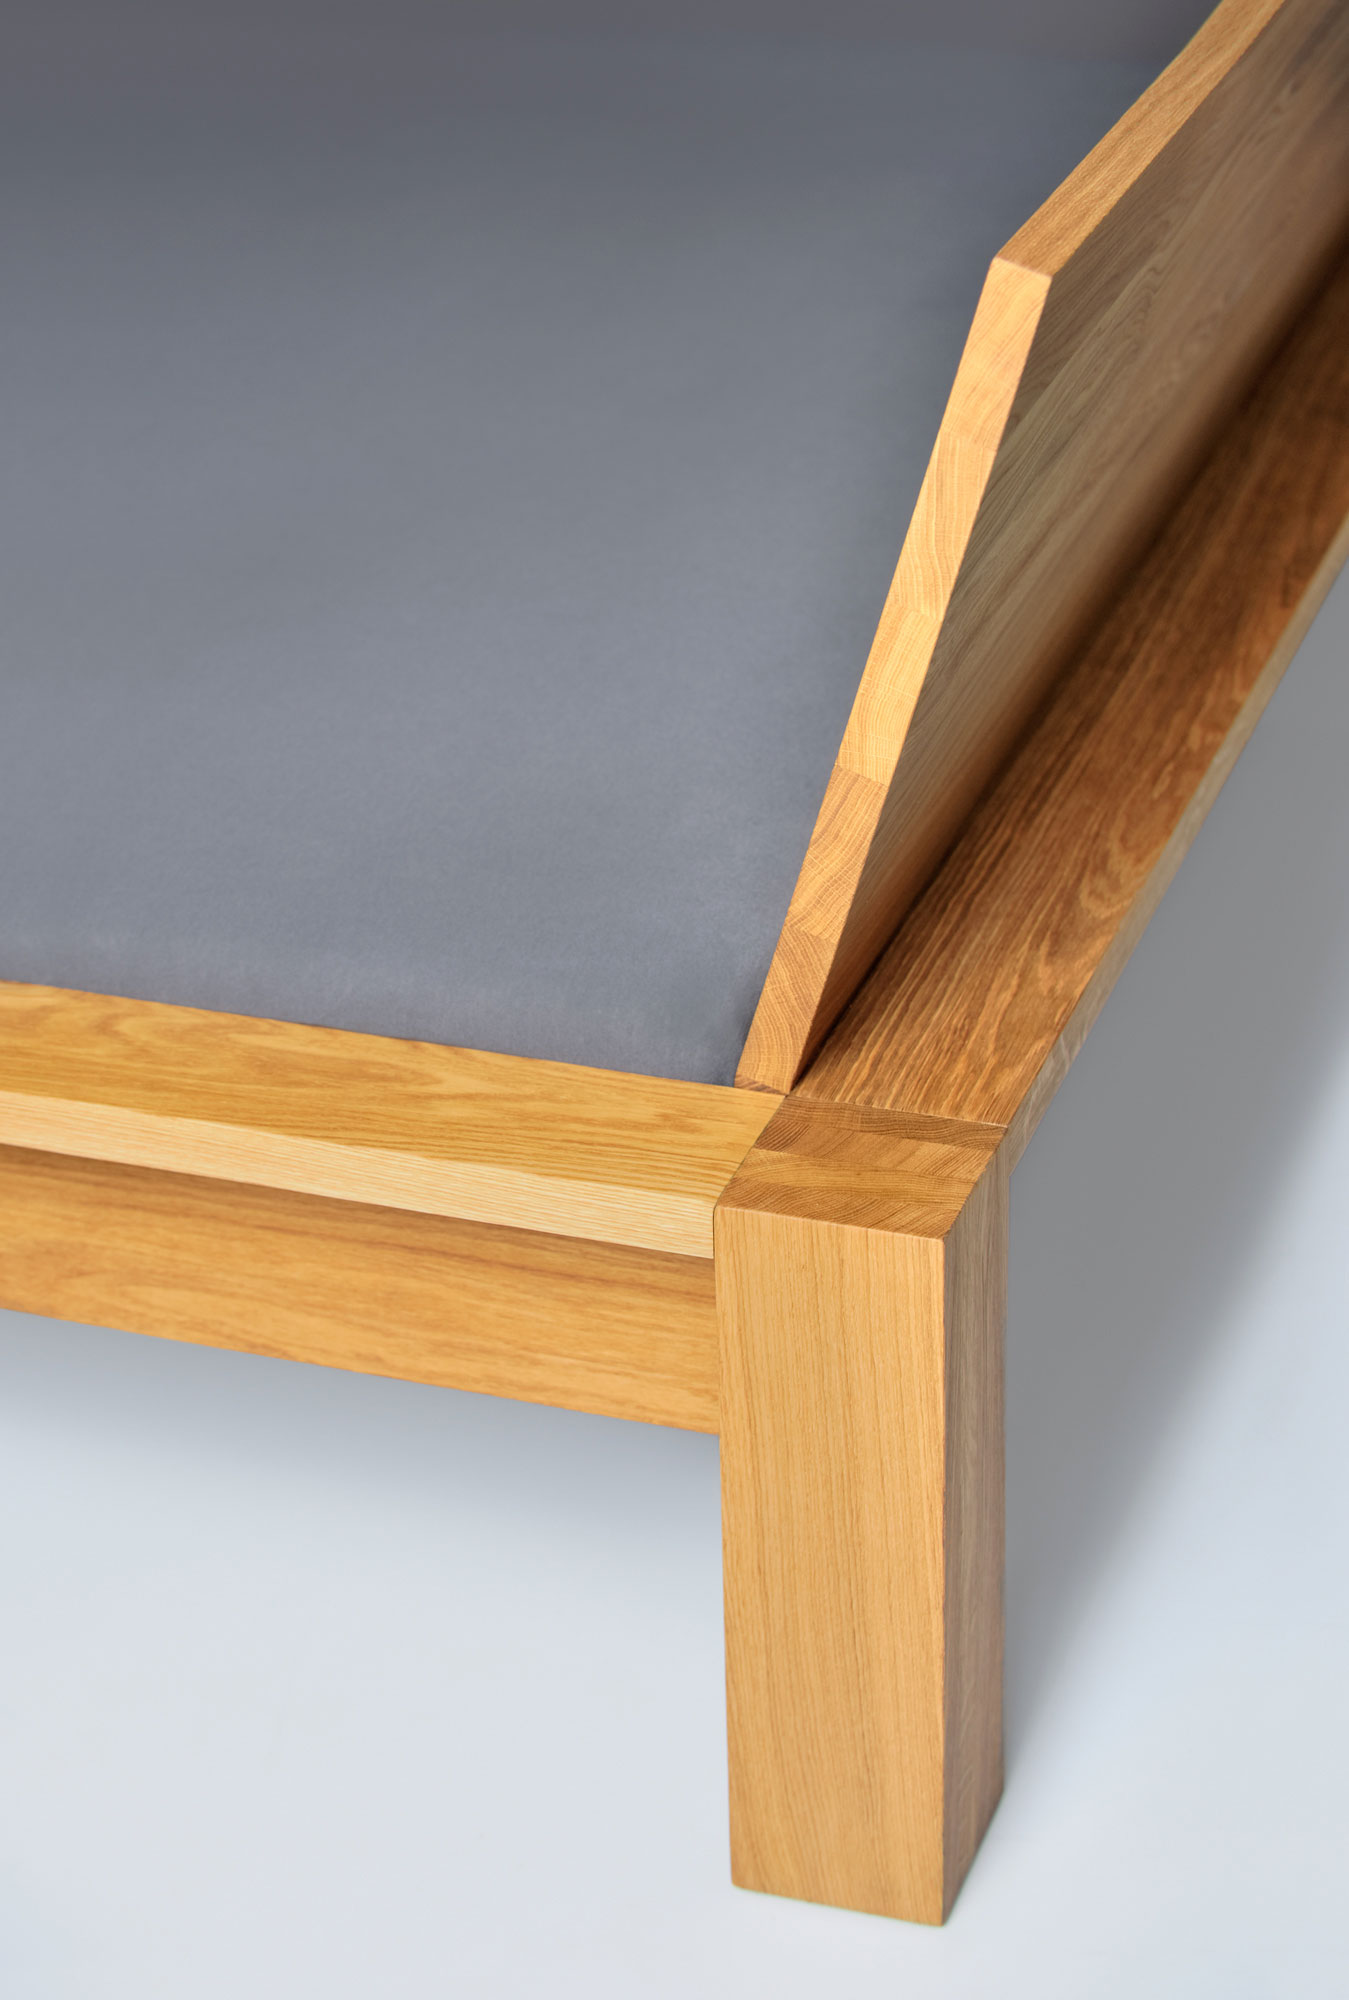 Rustic Oak Bed TAURUS nef9806 custom made in solid wood by vitamin design